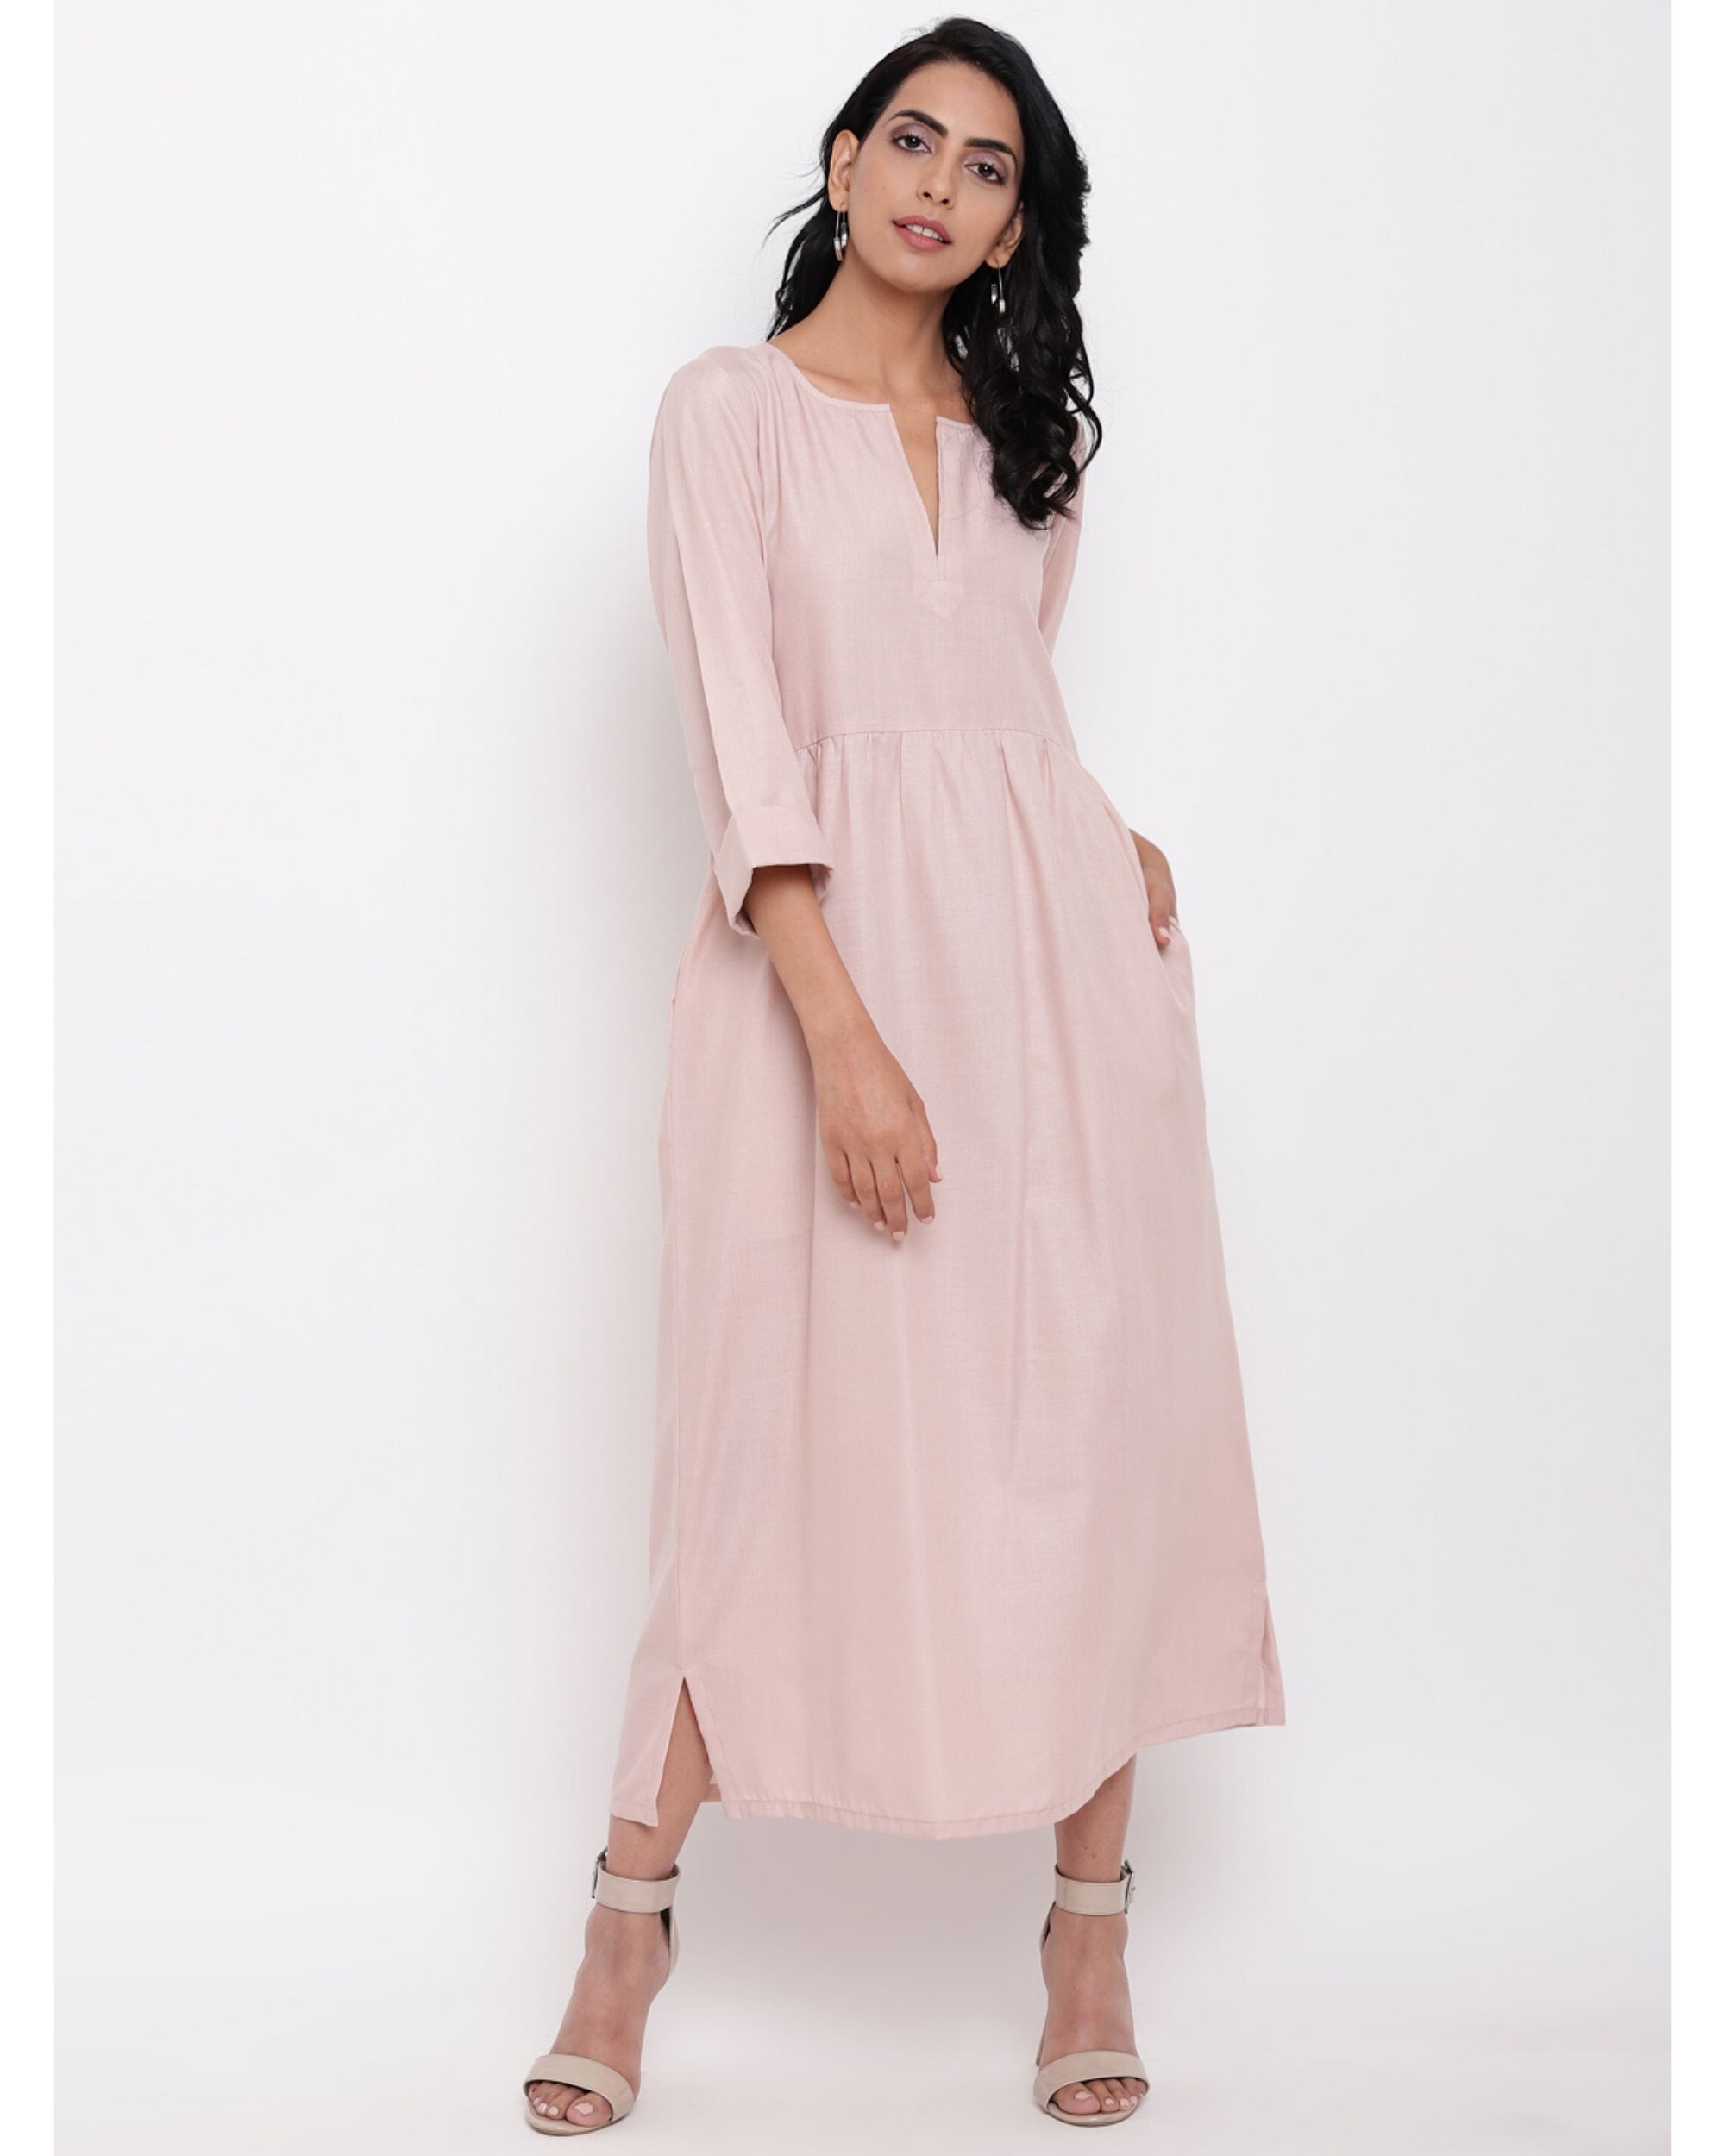 Blush pink gathered pocket dress by trueBrowns | The Secret Label